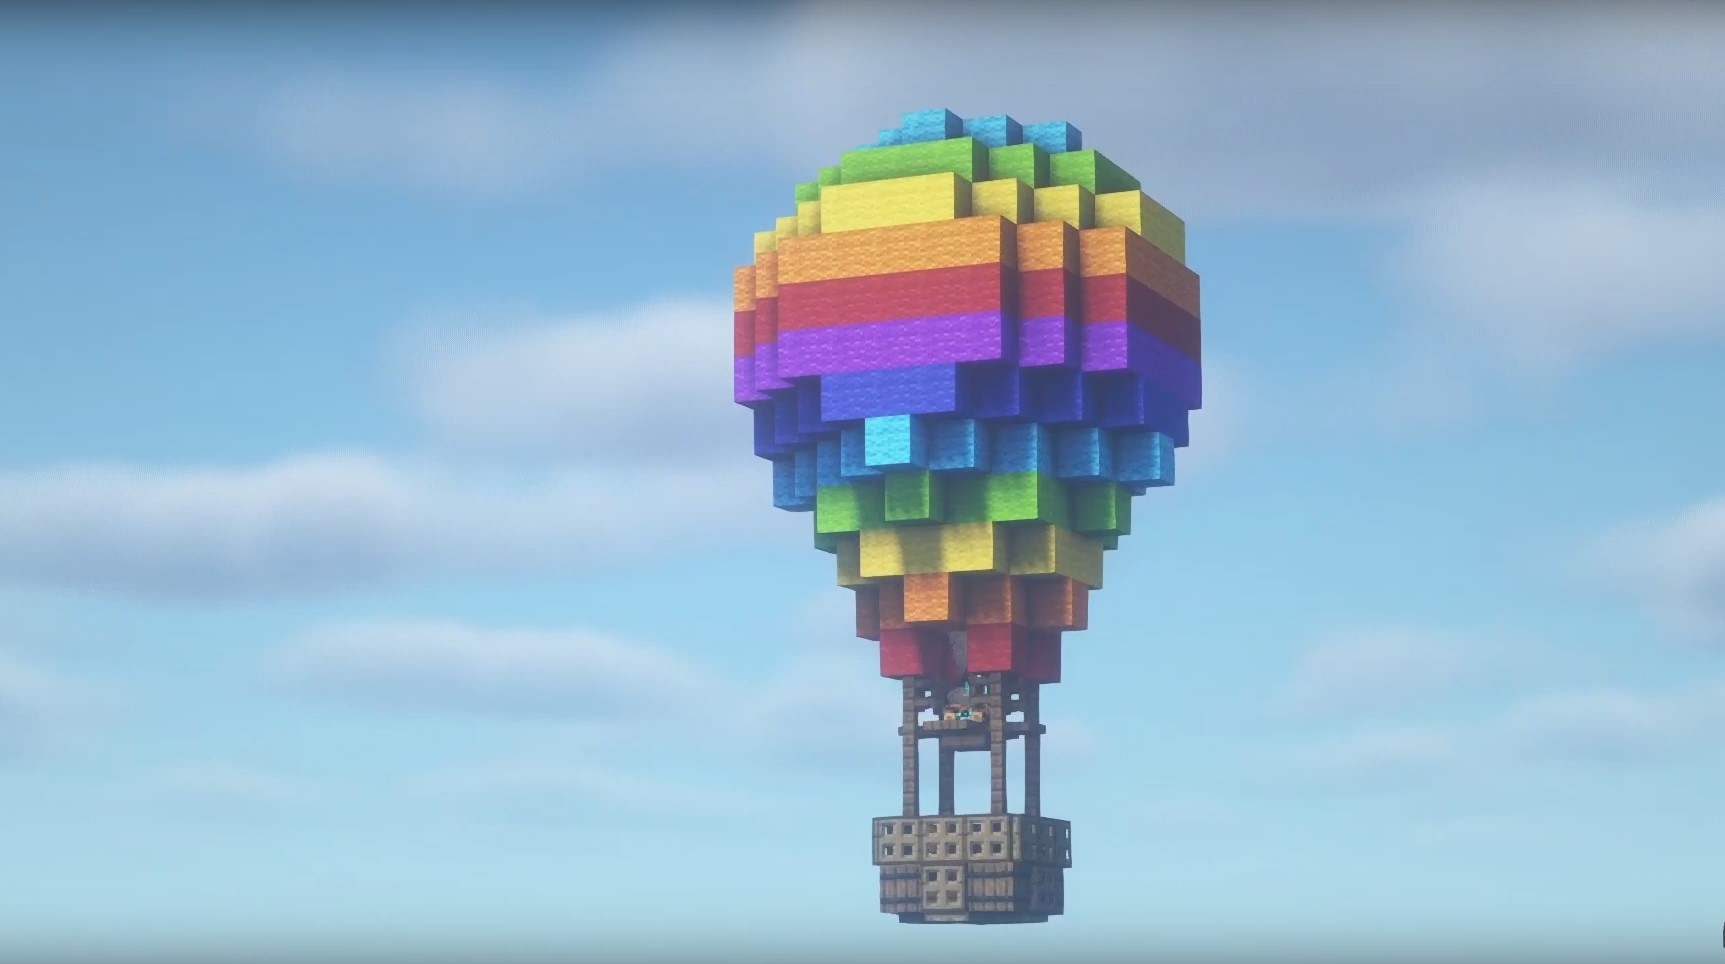 Hot Air Balloon minecraft building idea